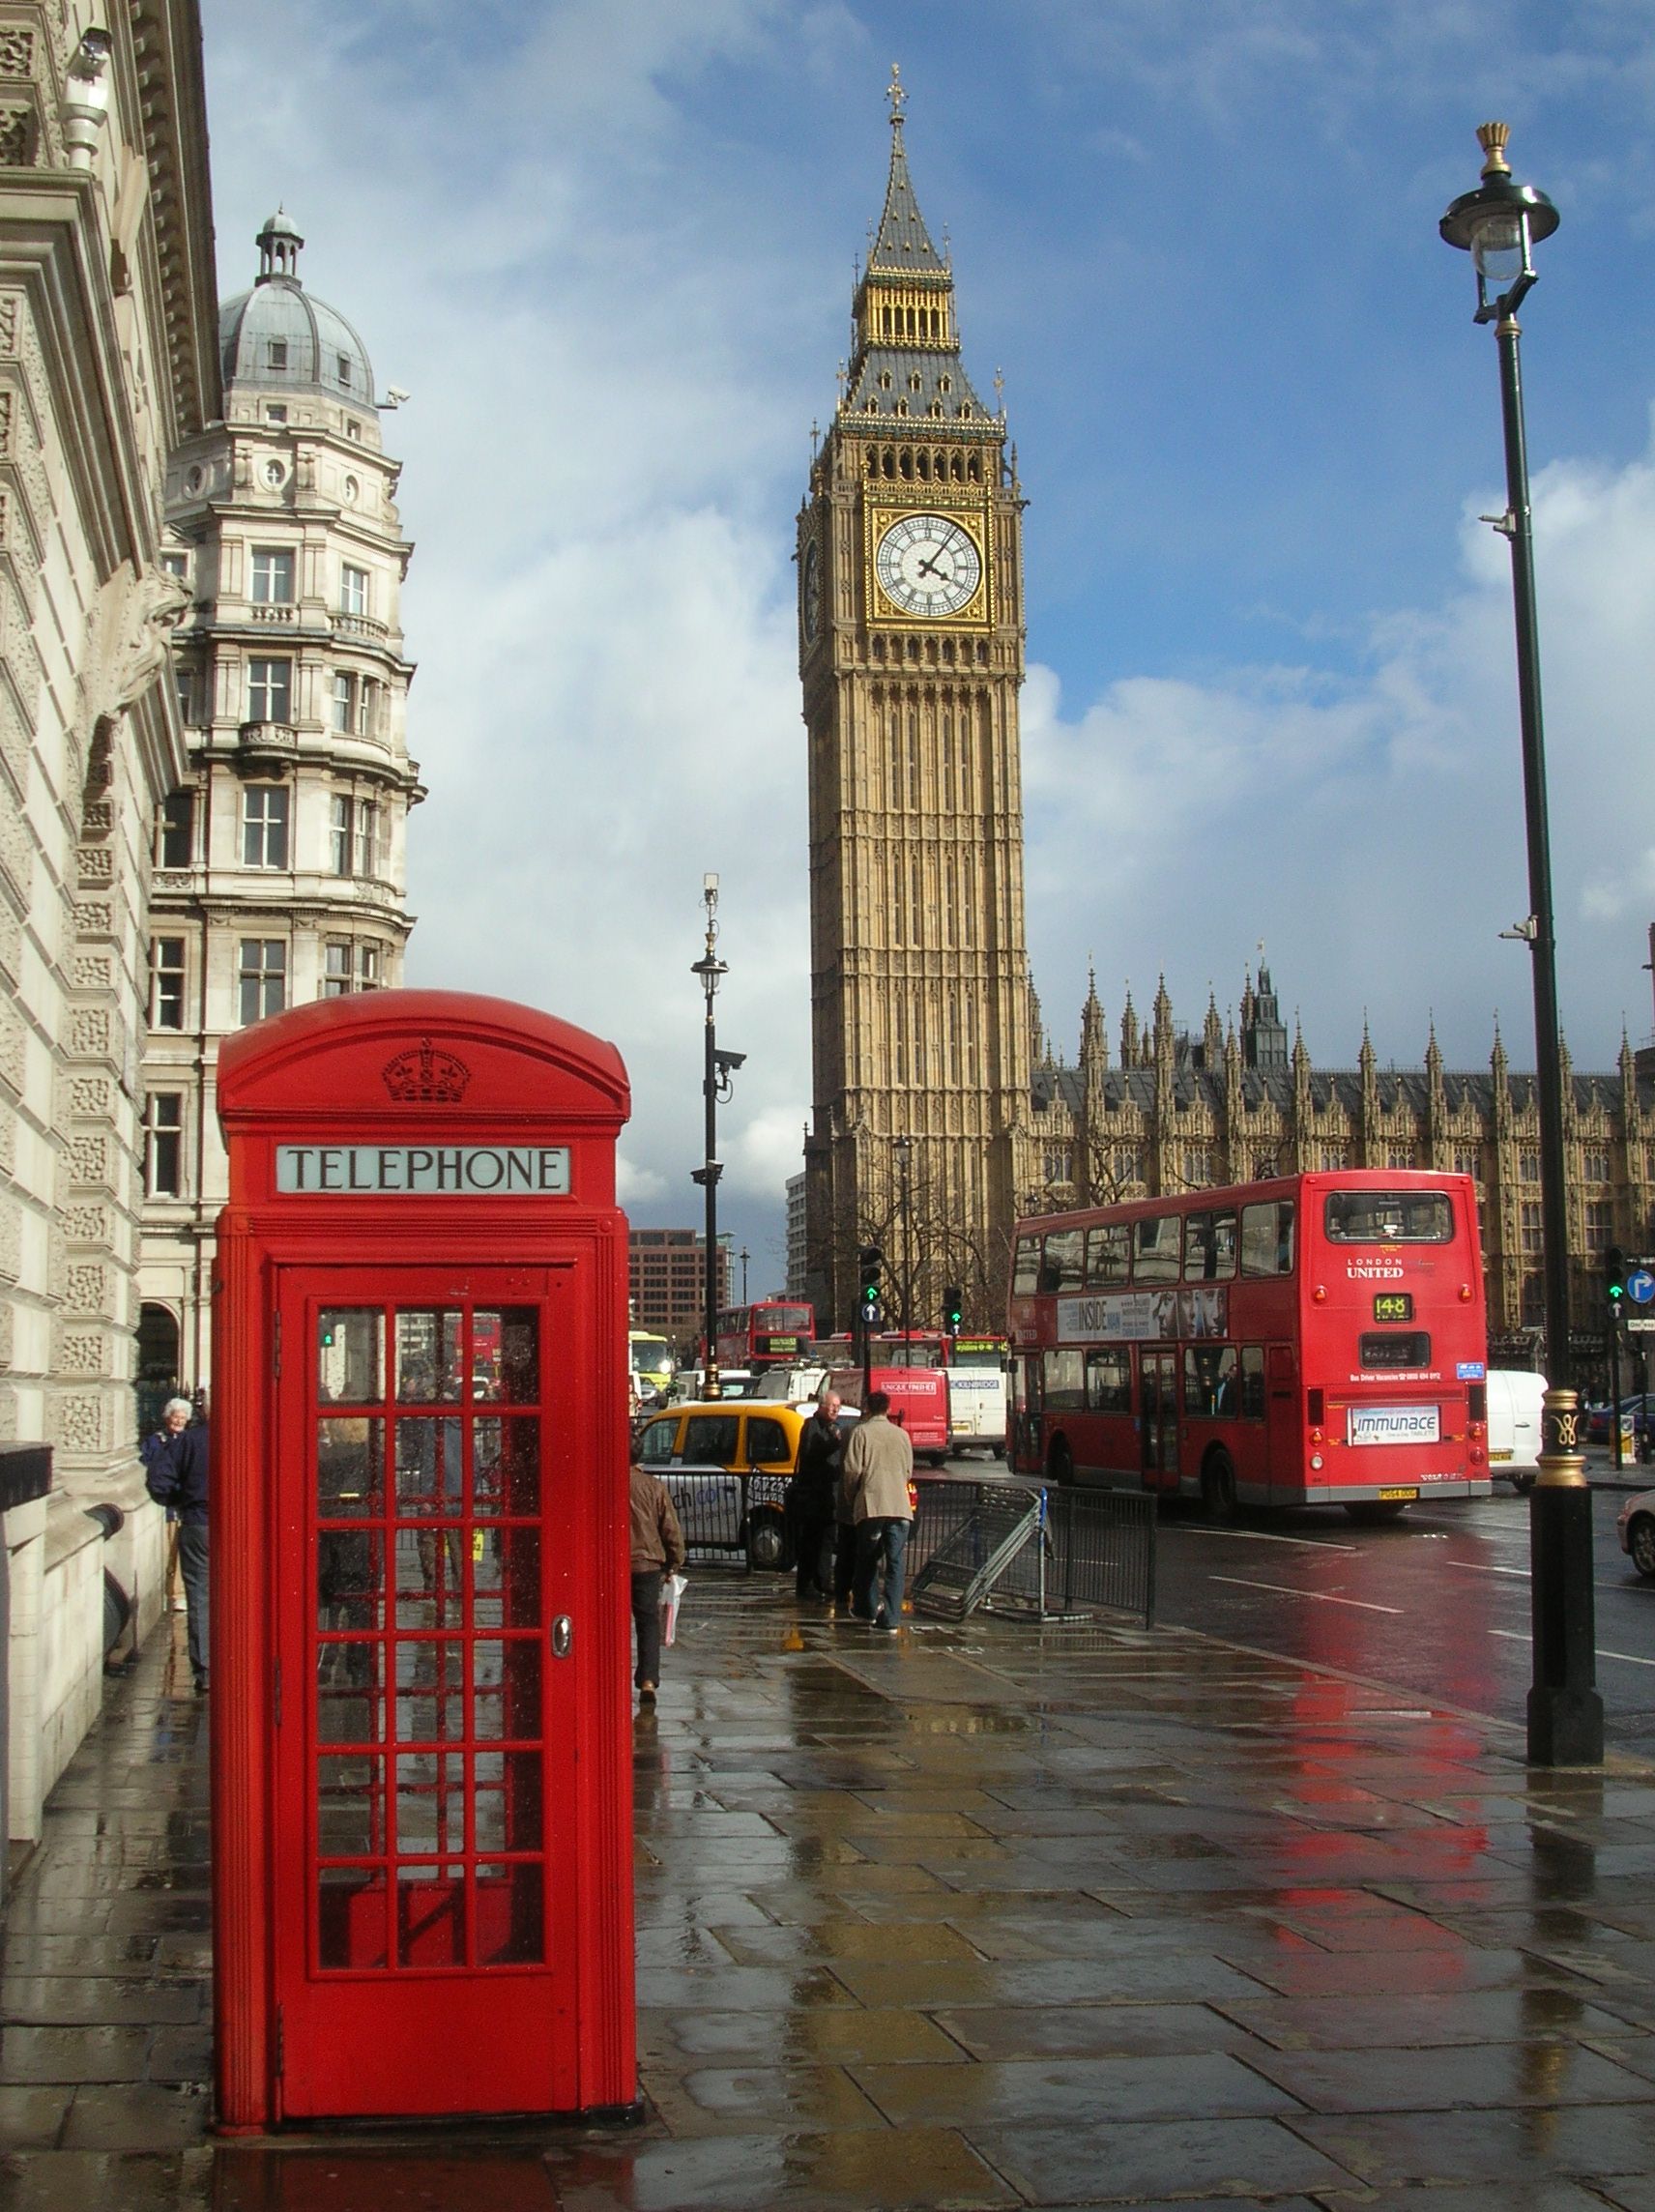 London London London -my favorite city in the world!